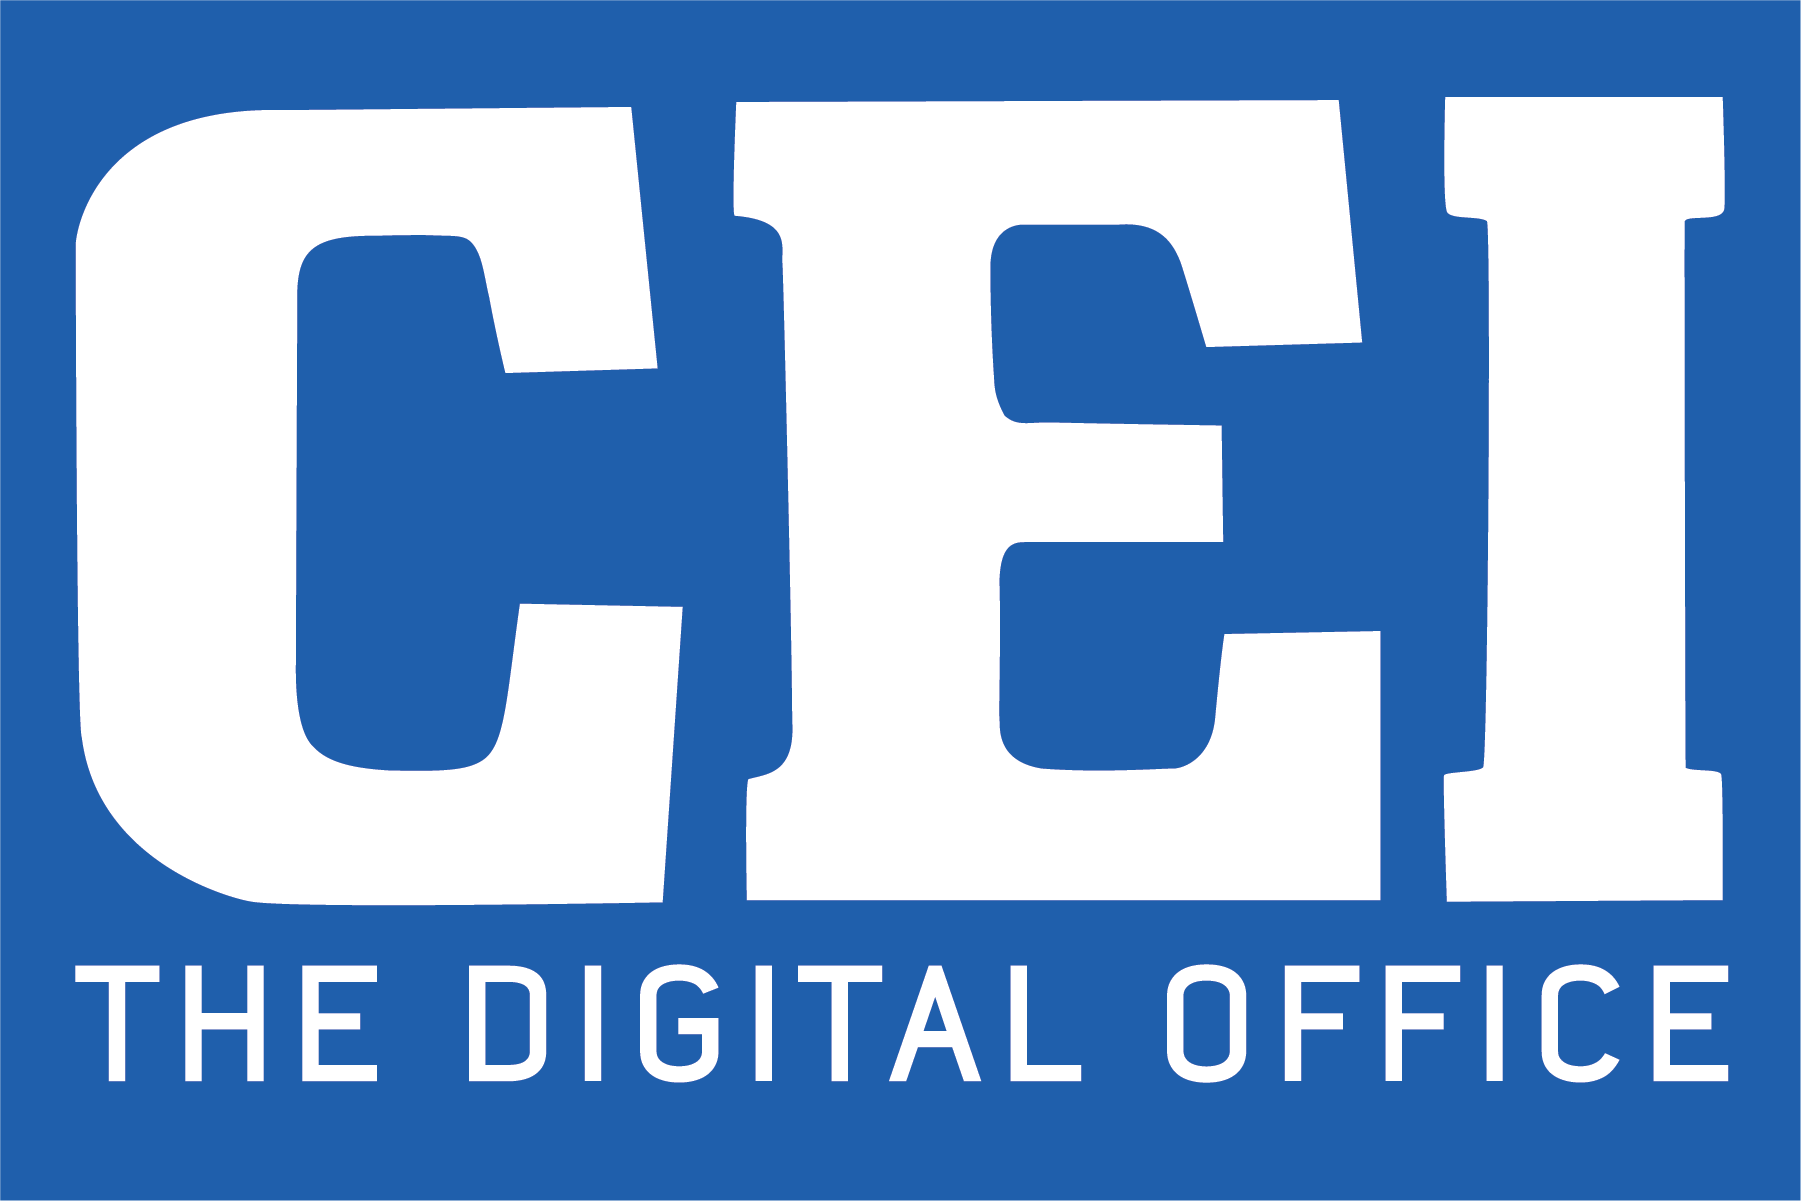 CEI - The Digital Office